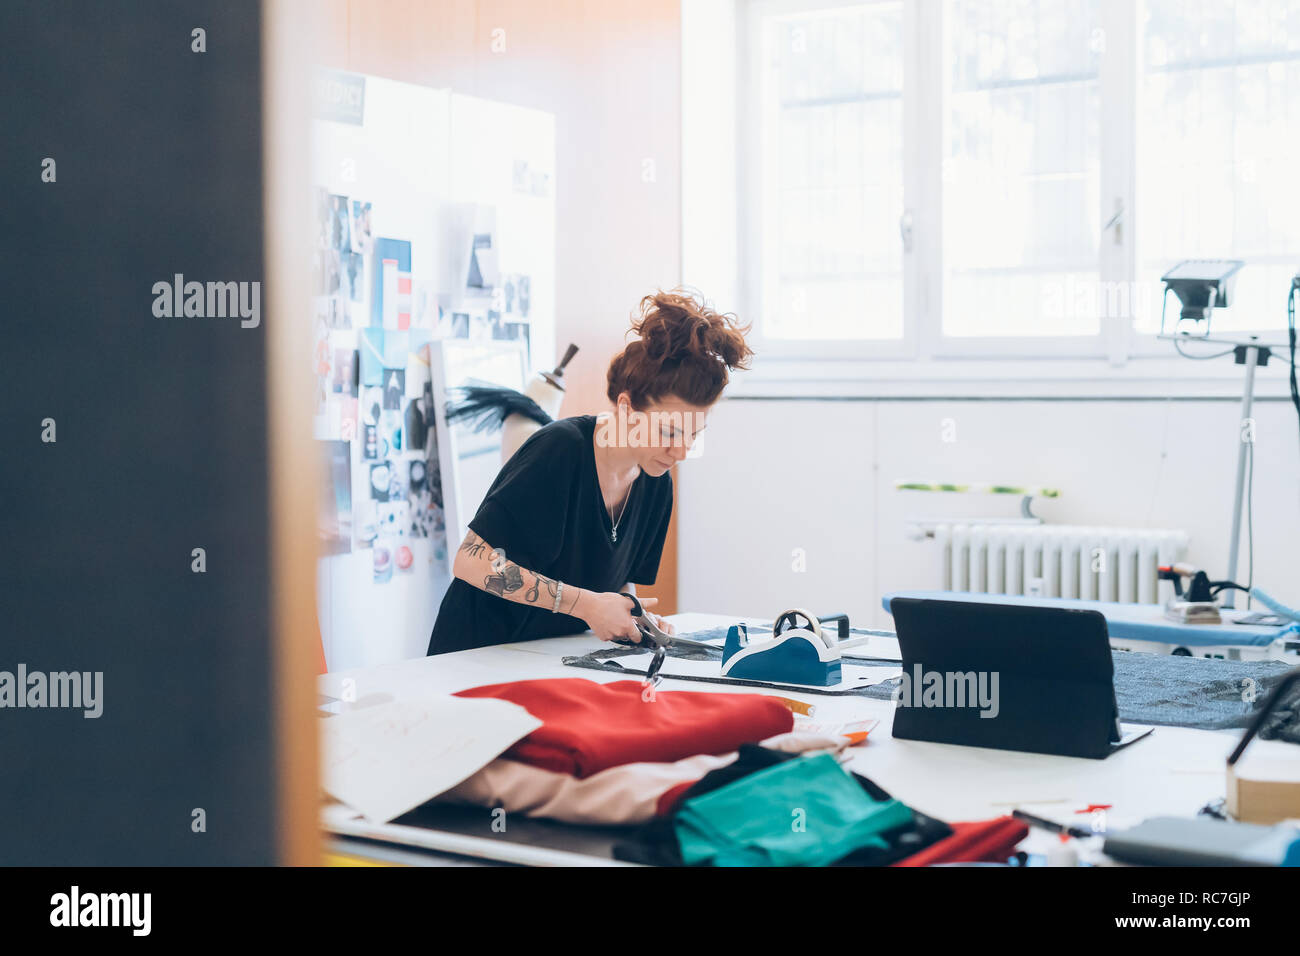 Fashion designer cutting fabric from dressmaker's pattern Stock Photo